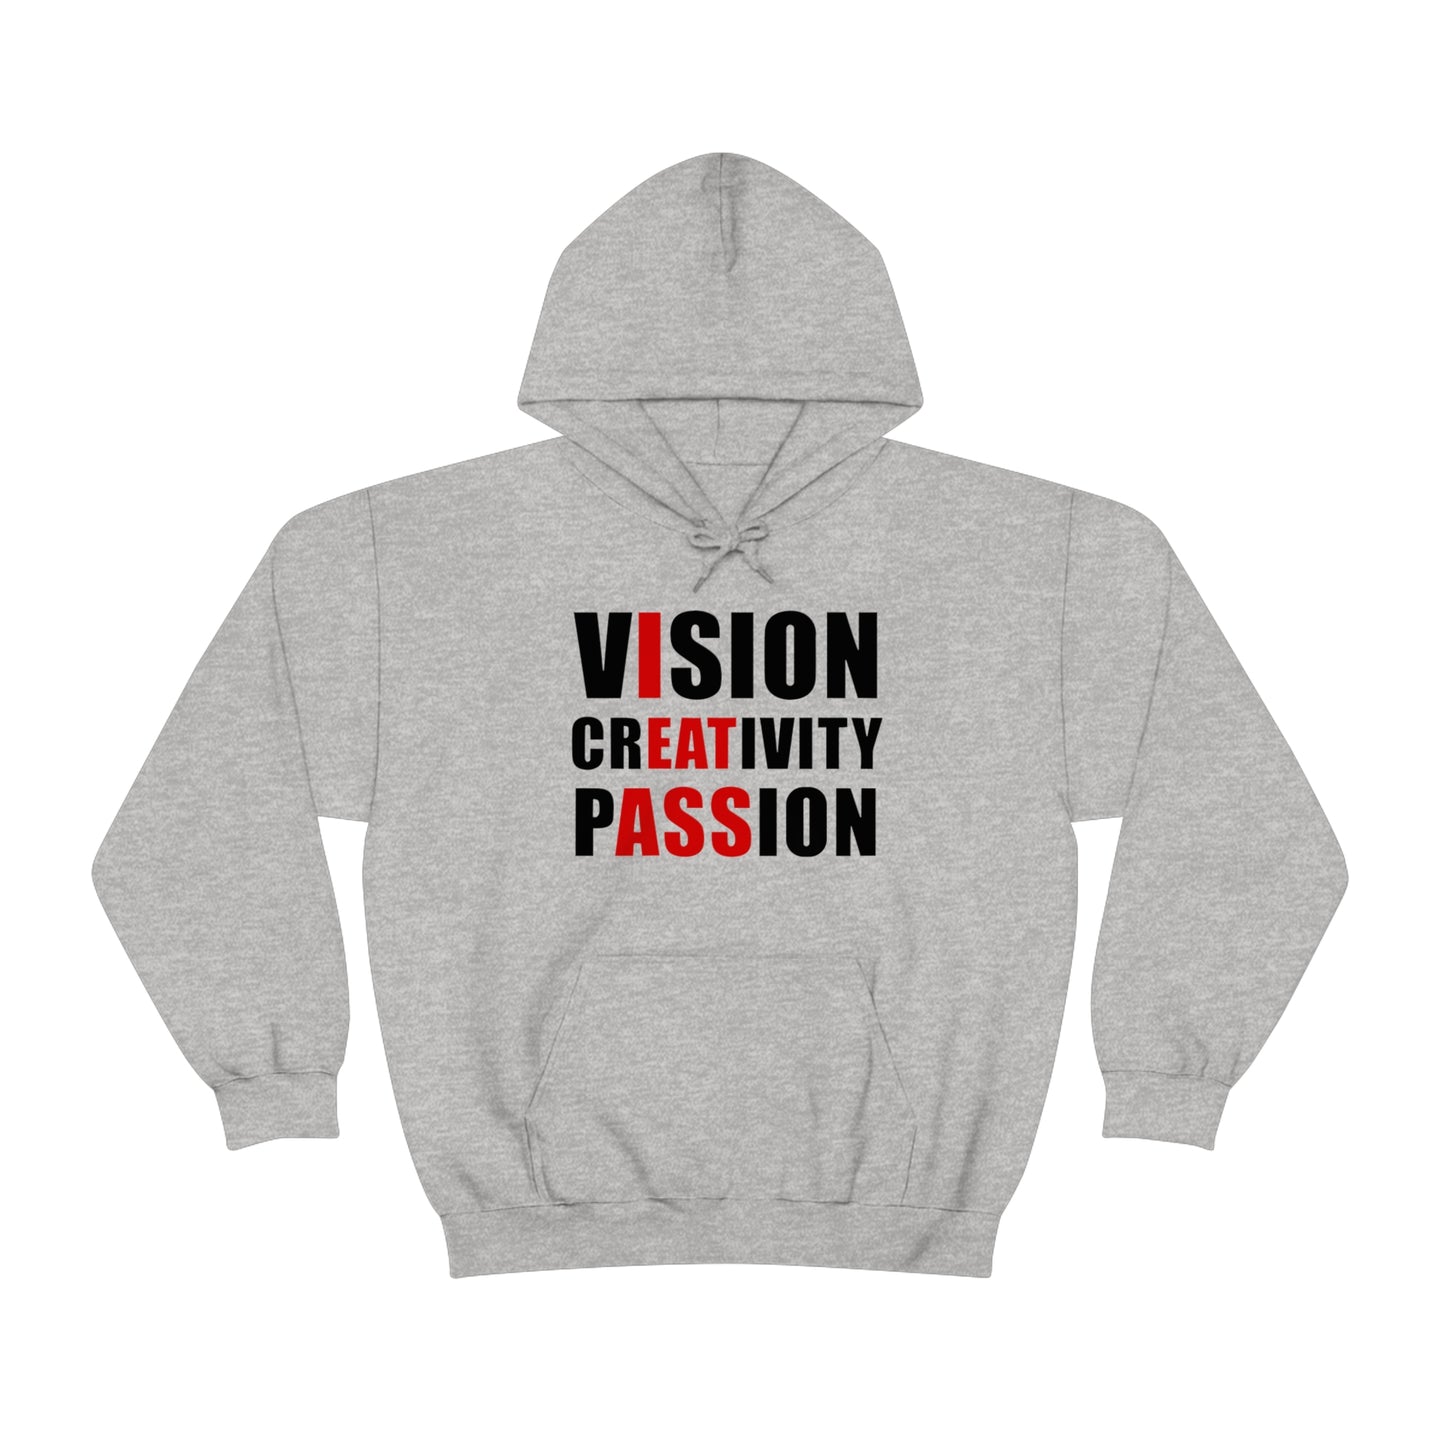 "Vision Creativity Passion" Hoodie